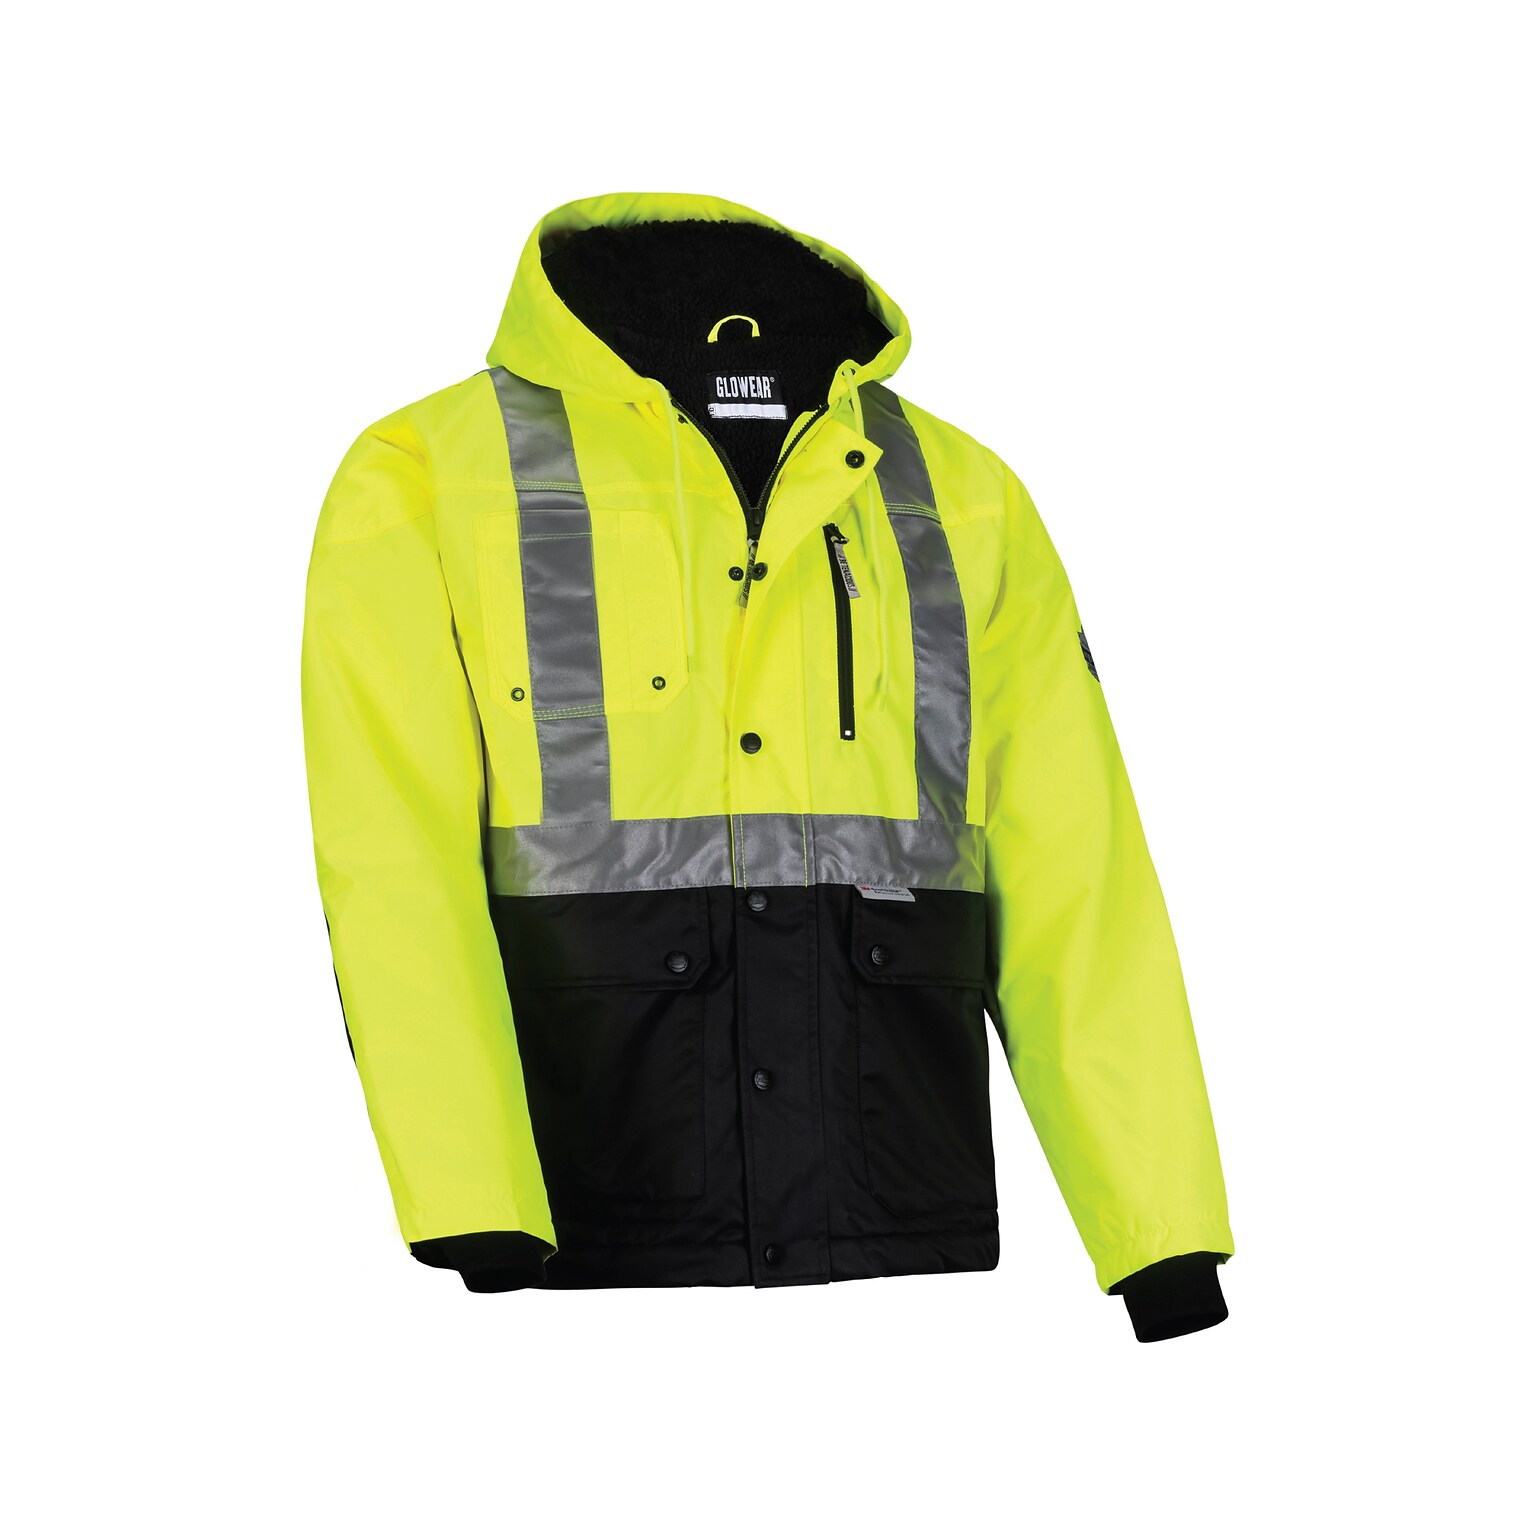 GloWear 8275 Heavy-Duty High-Visibility Workwear Jacket, M, Lime/Black (23973)